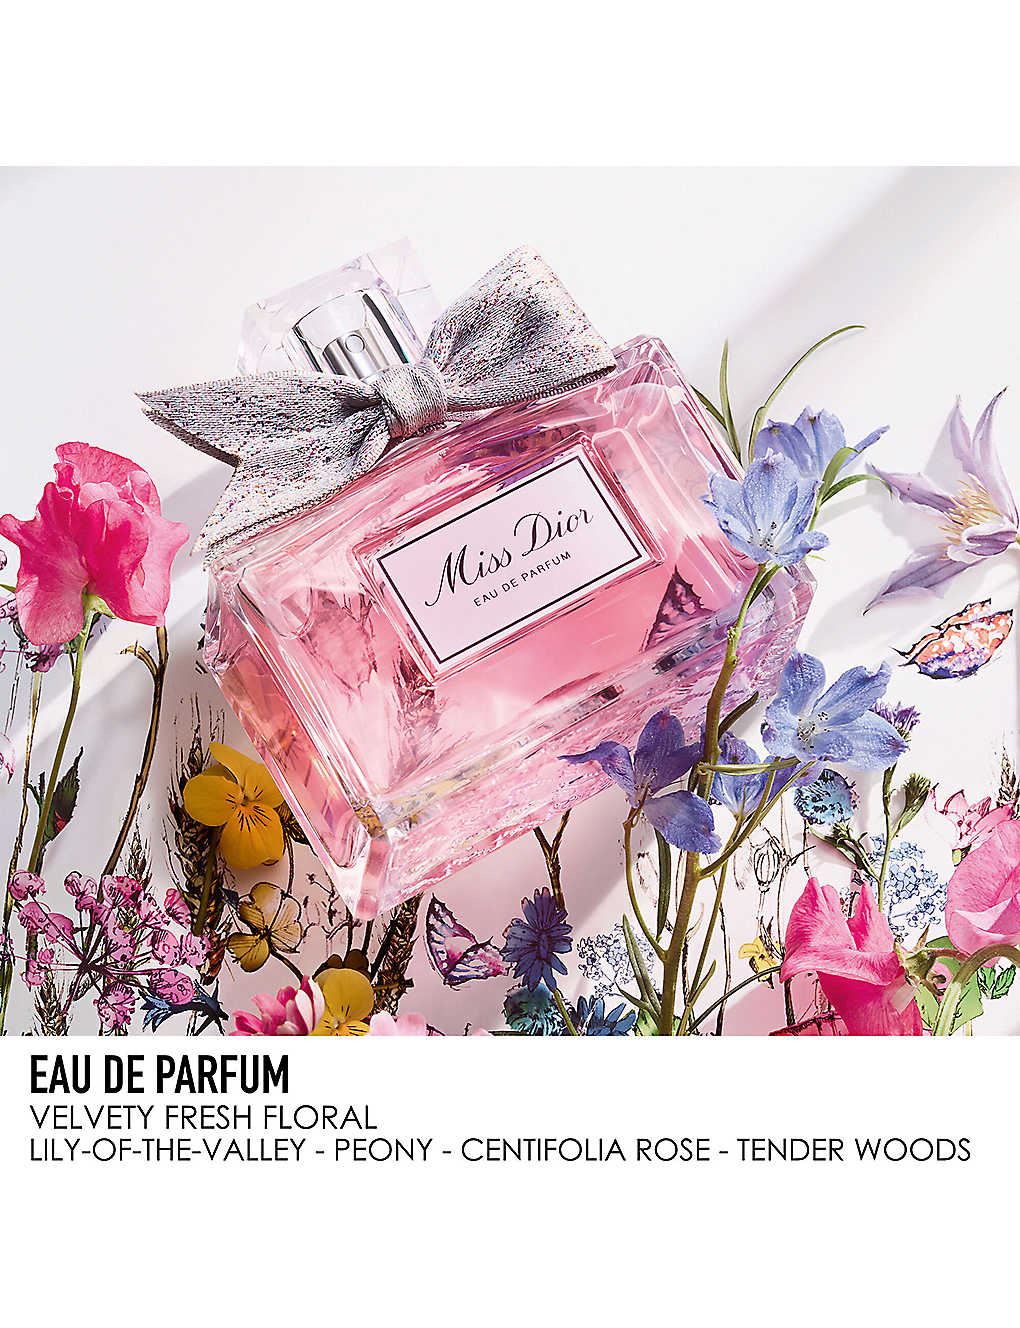 Dior Miss Dior Limited Edition Eau de Parfum